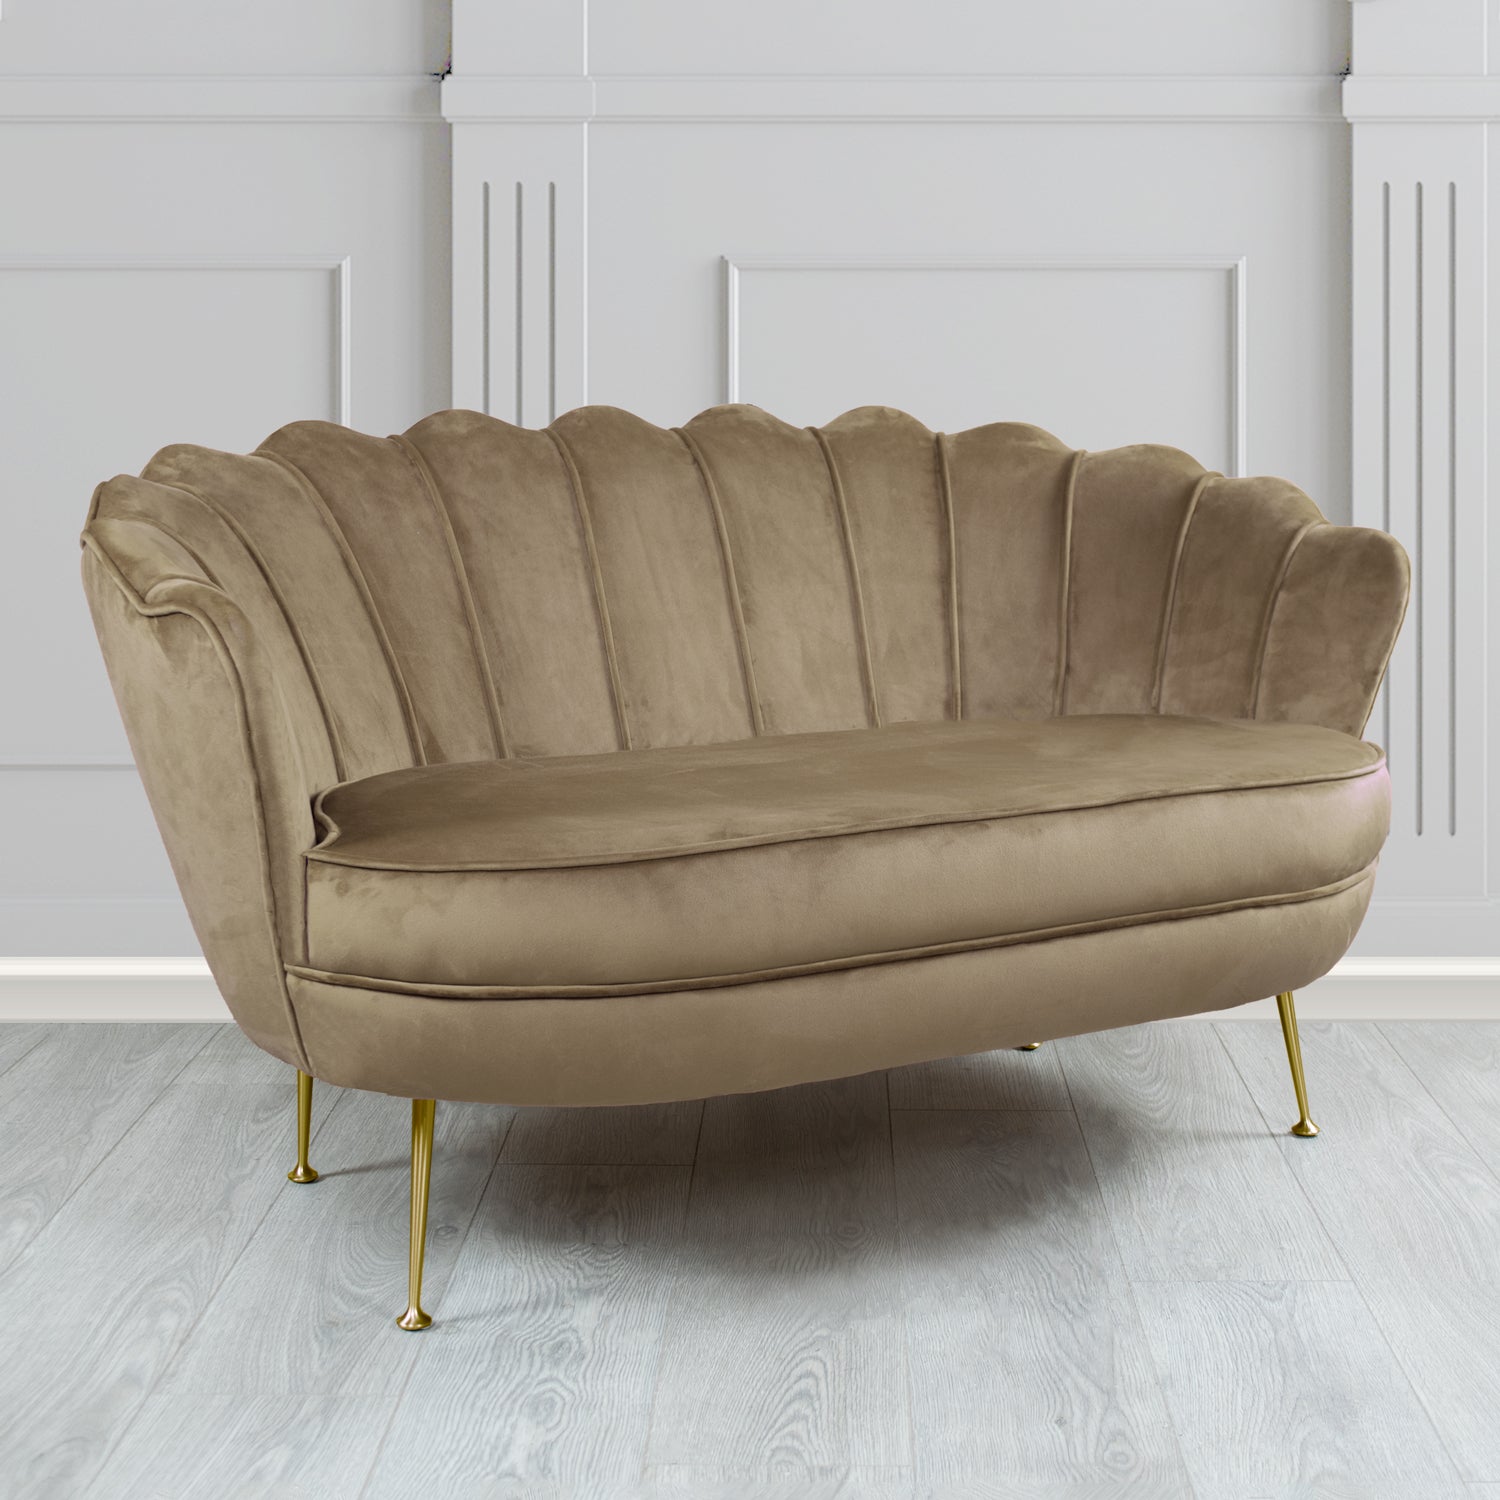 Olivia Monaco Biscuit Plain Velvet Fabric 2 Seater Shell Sofa - The Tub Chair Shop